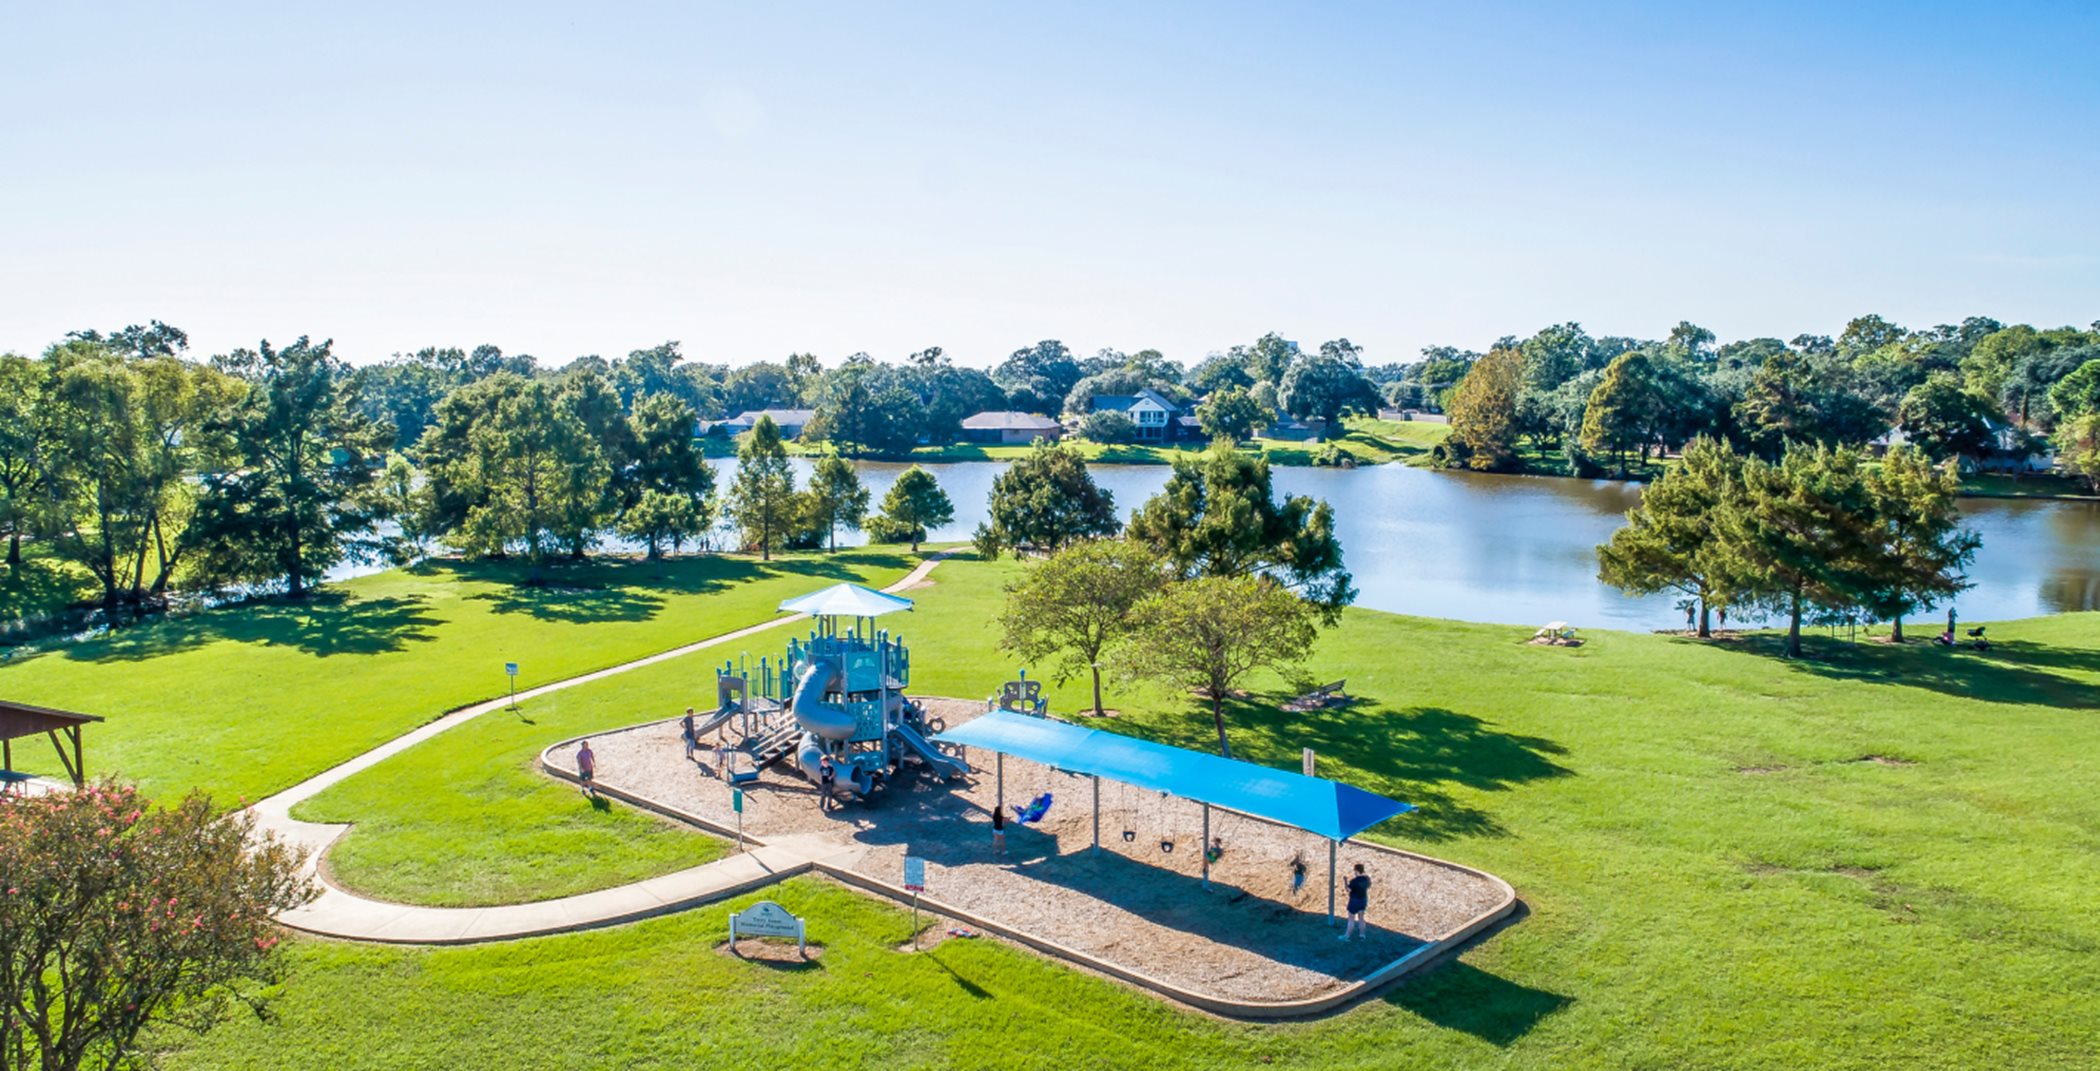 Morrison Park in nearby Lake Jackson